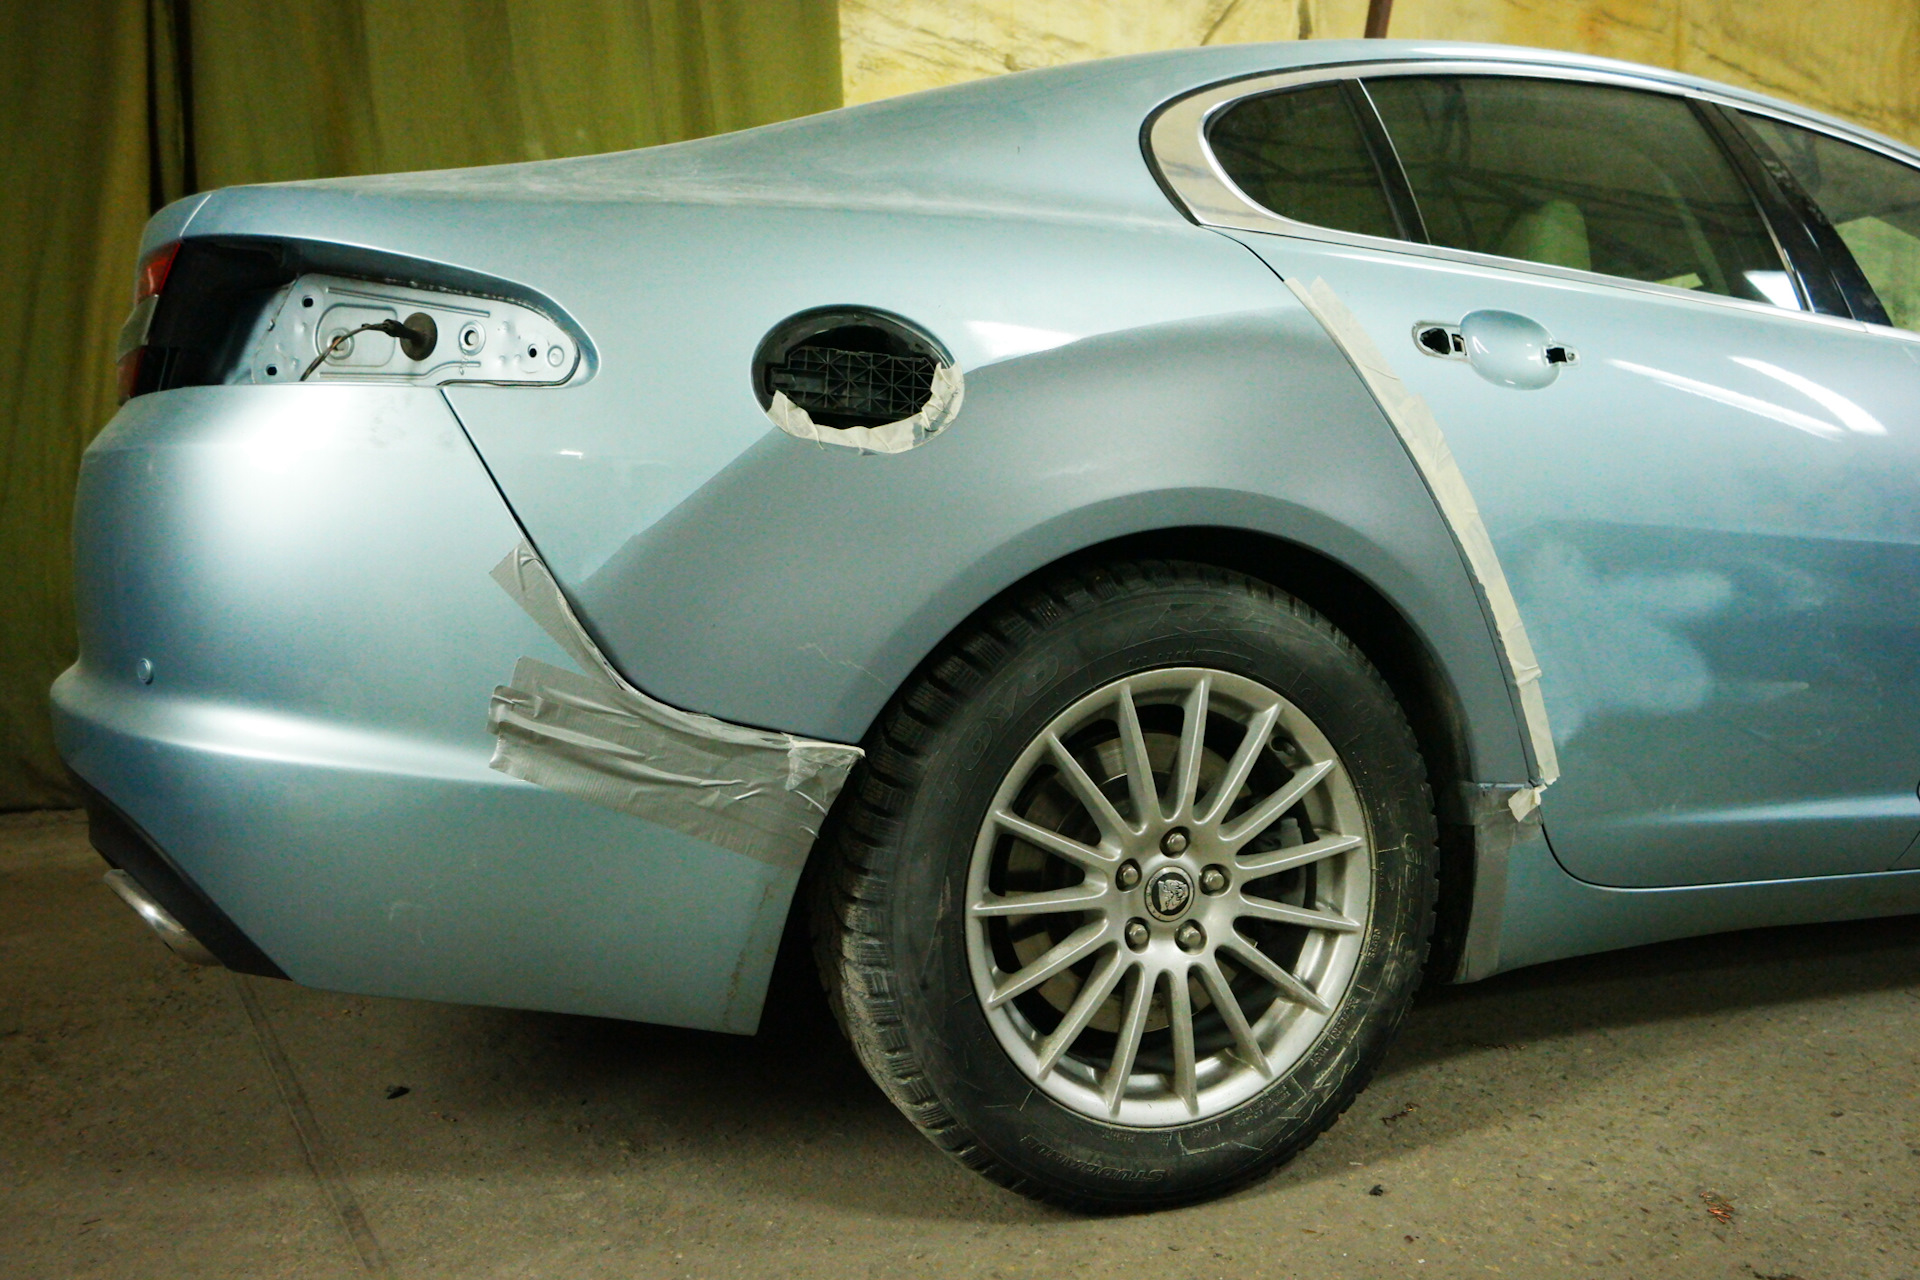 Ремонт jaguar. Ягуар алюминиевый кузов. Ягуар XF 2014 ржавчина. Покраска кузова на Ягуар. Расширение кузова металлом.